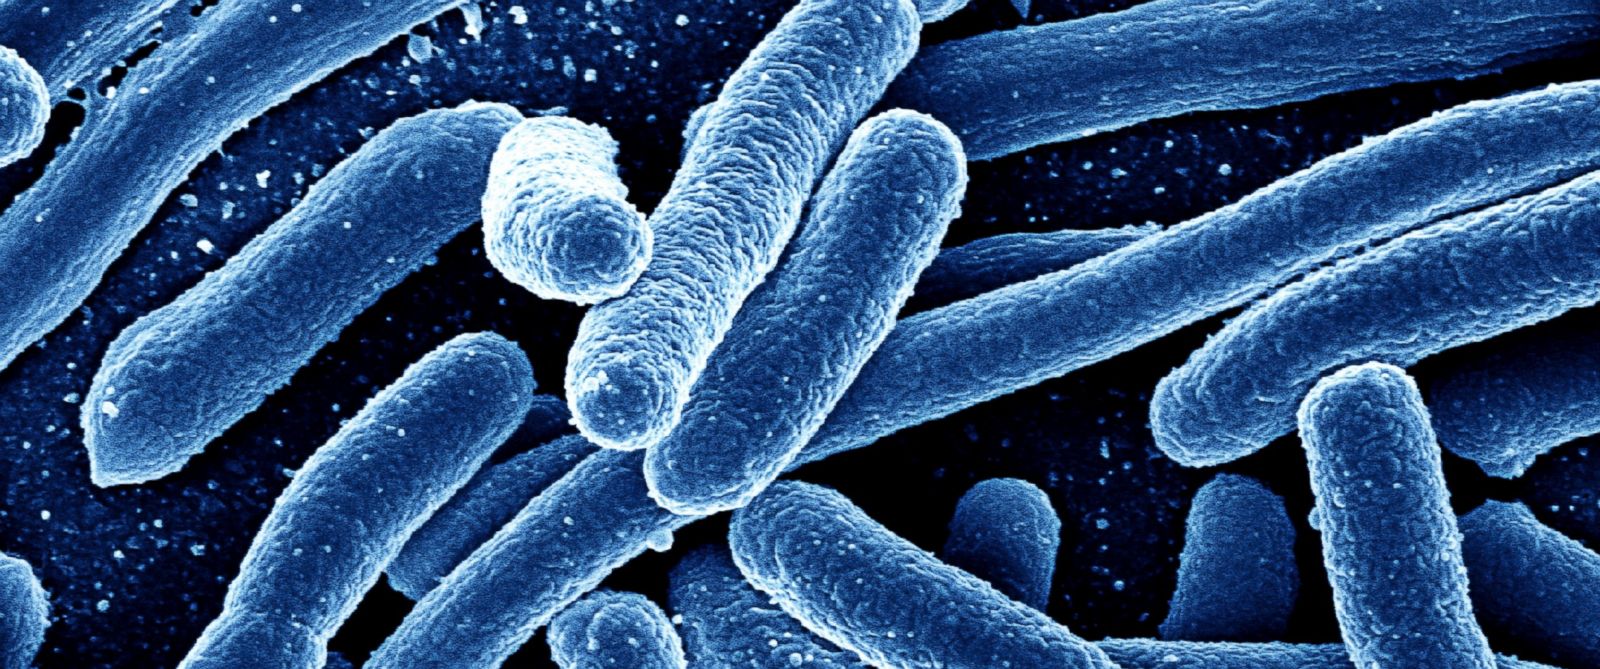 Rare, frightening superbug gene discovered on US pig farm